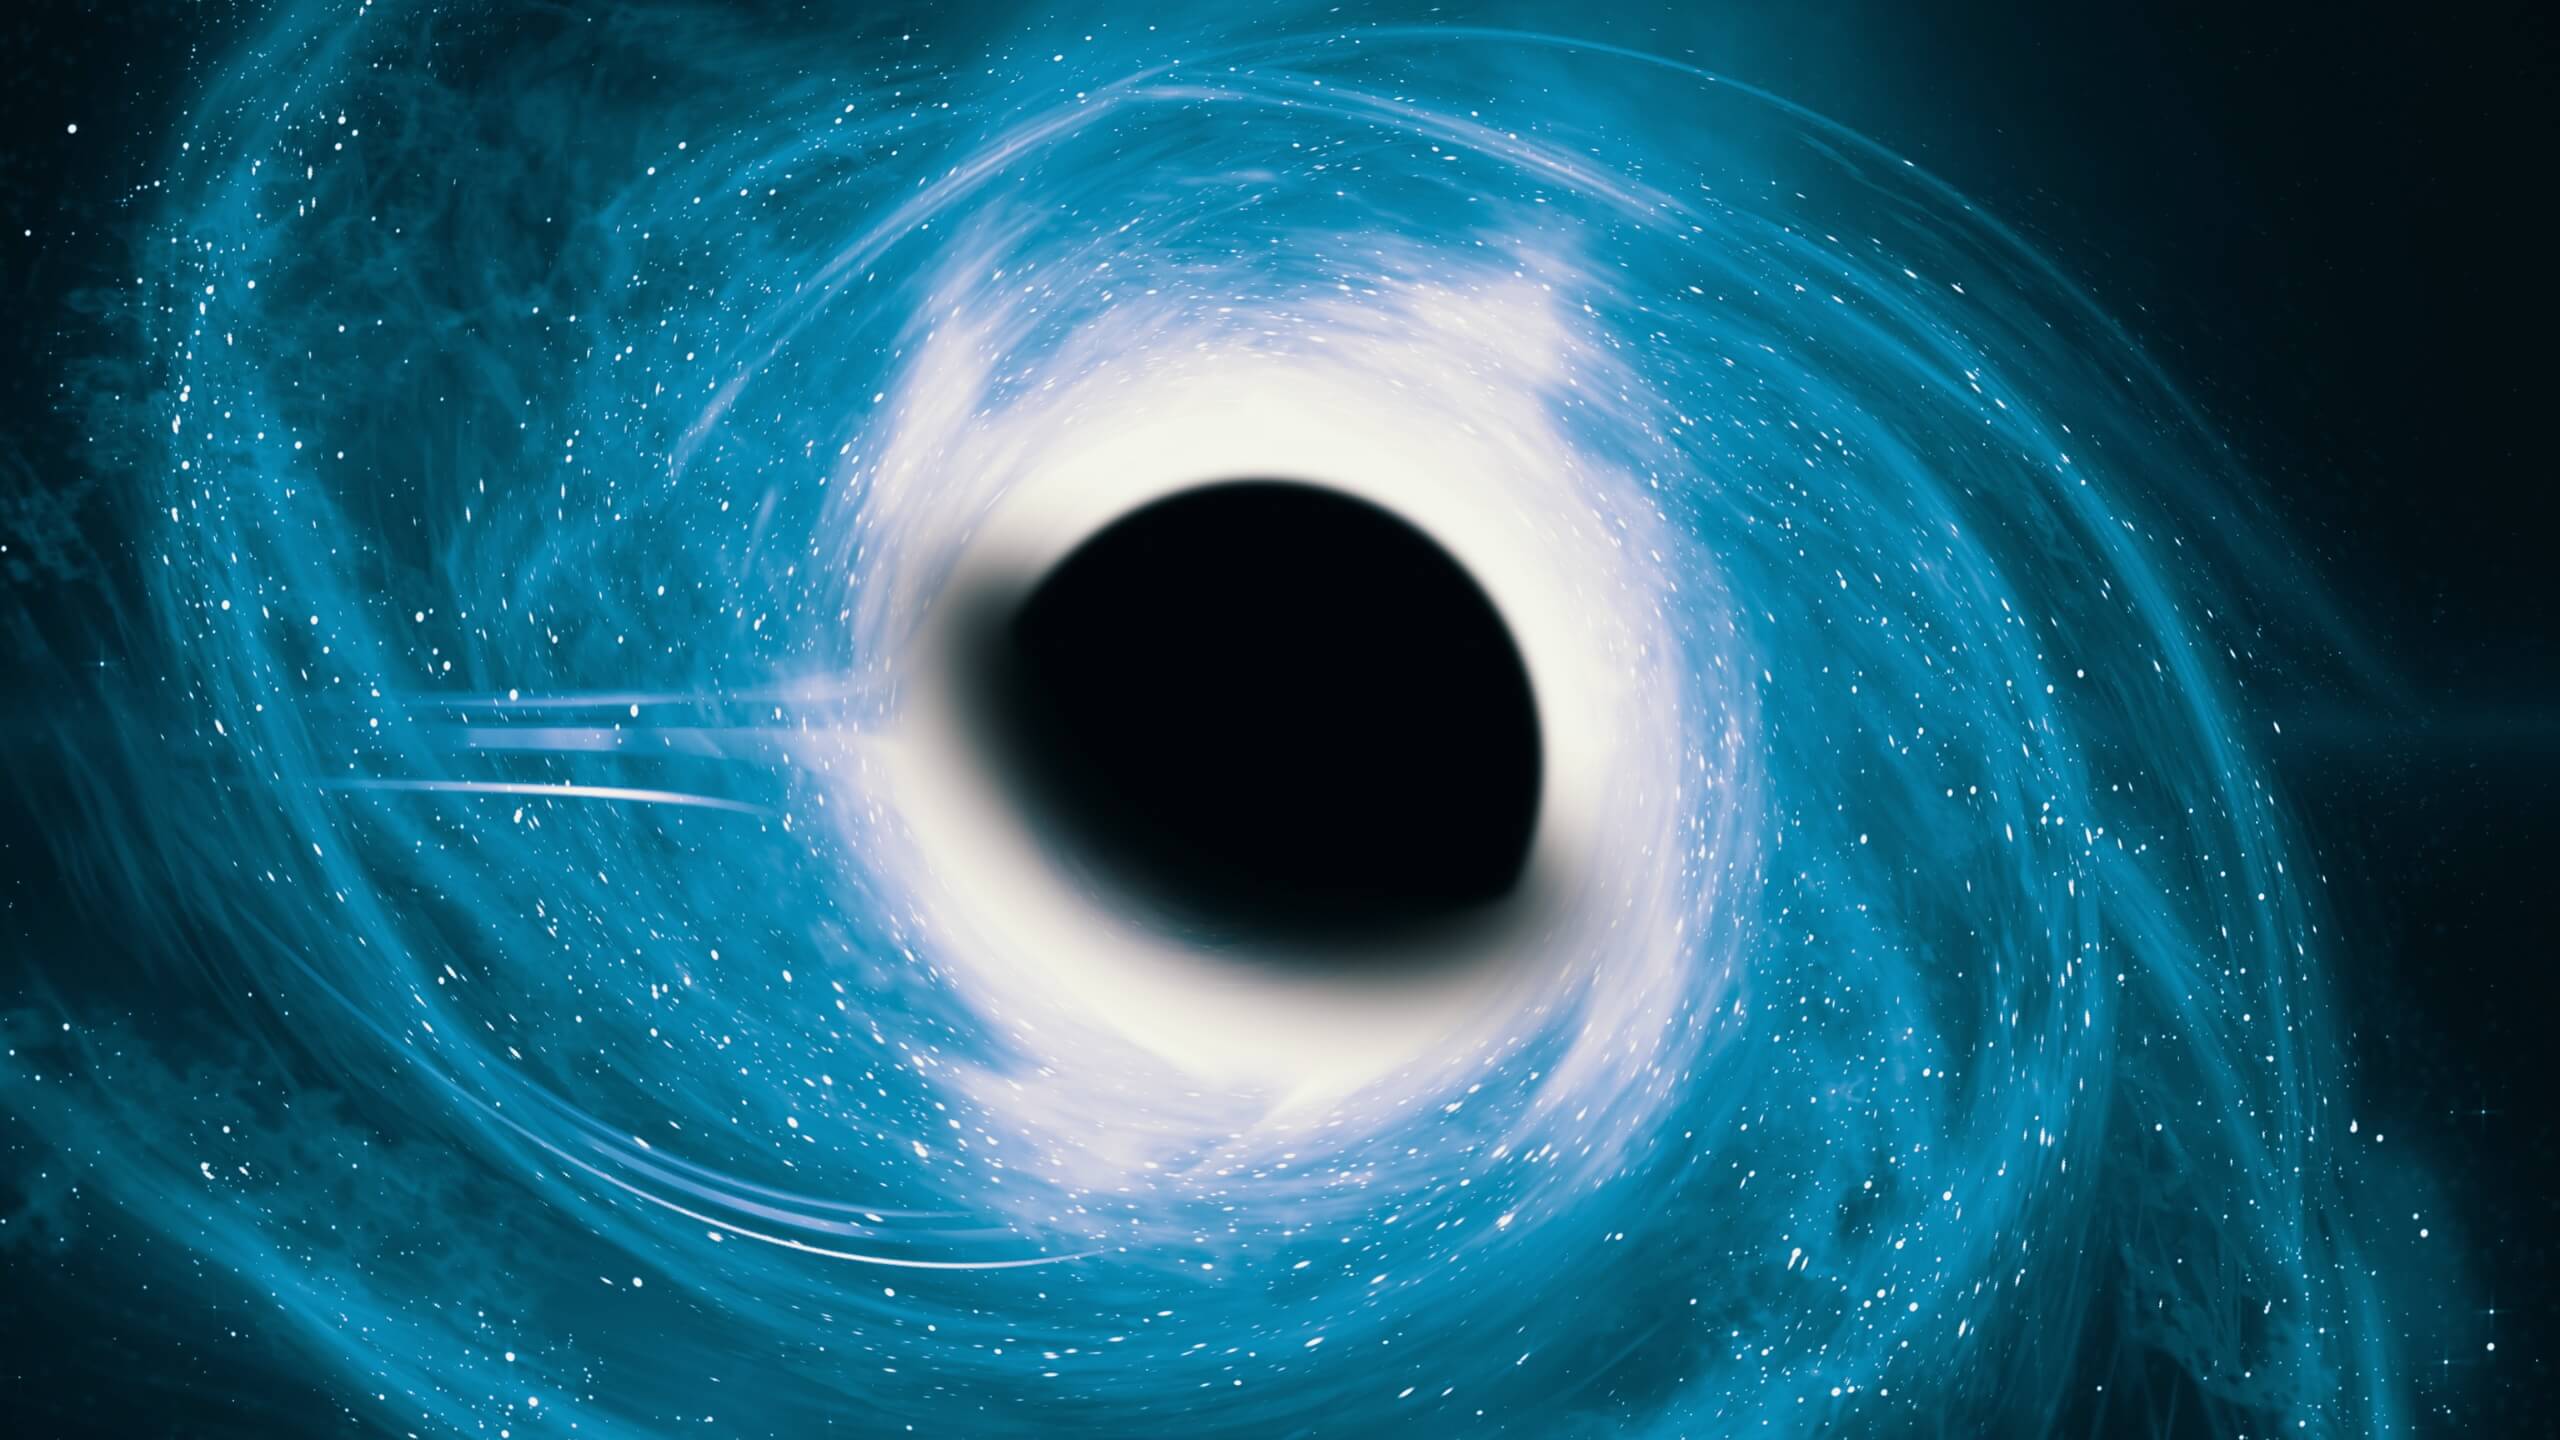 The Phoenix A black hole has a mass equivalent to 100 Billion Suns